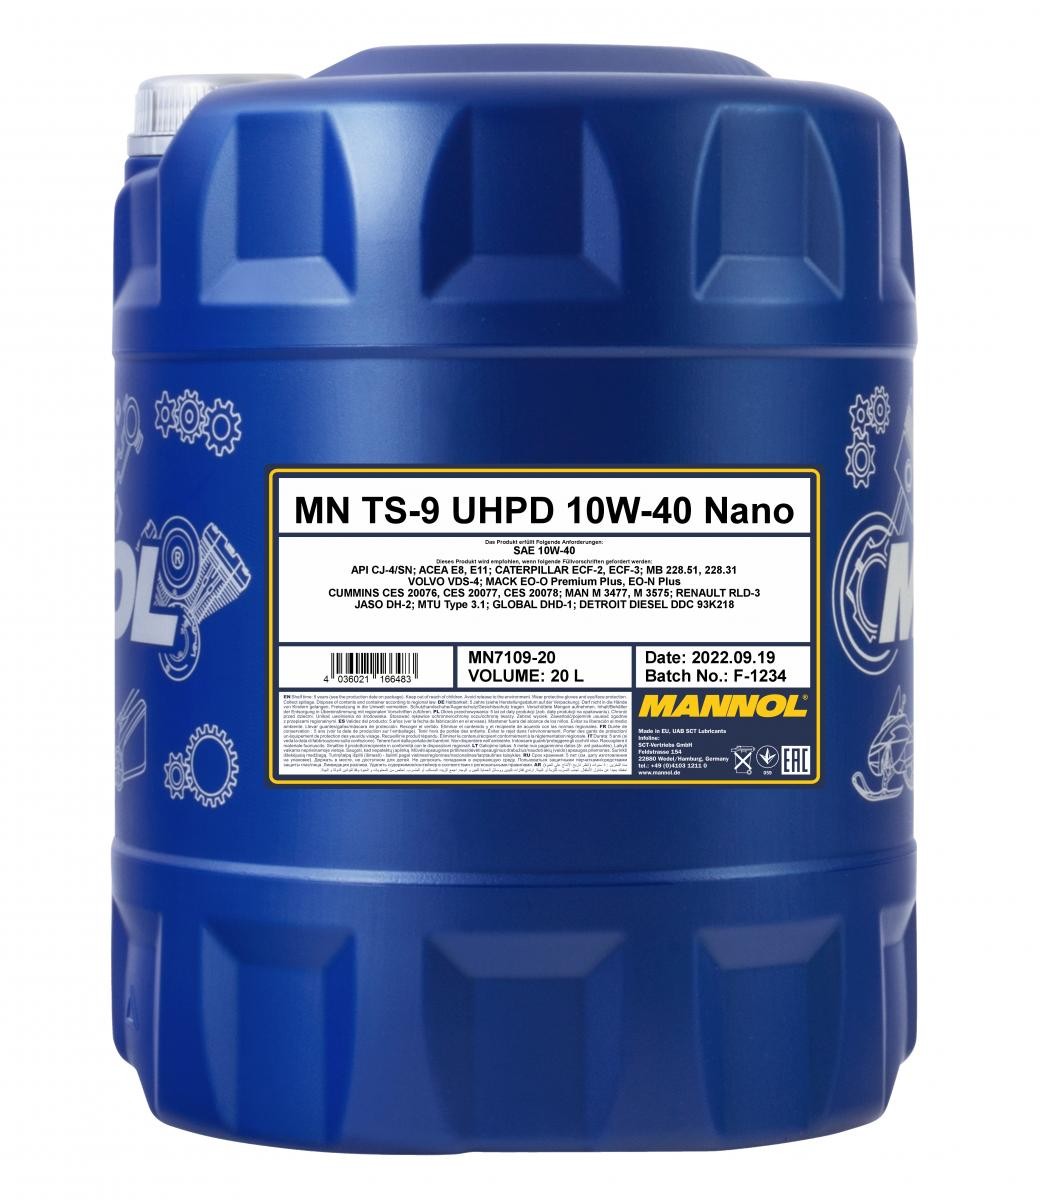 Car oil 10W-40 longlife diesel - MN7109-20 MANNOL TS-9, UHPD Nano